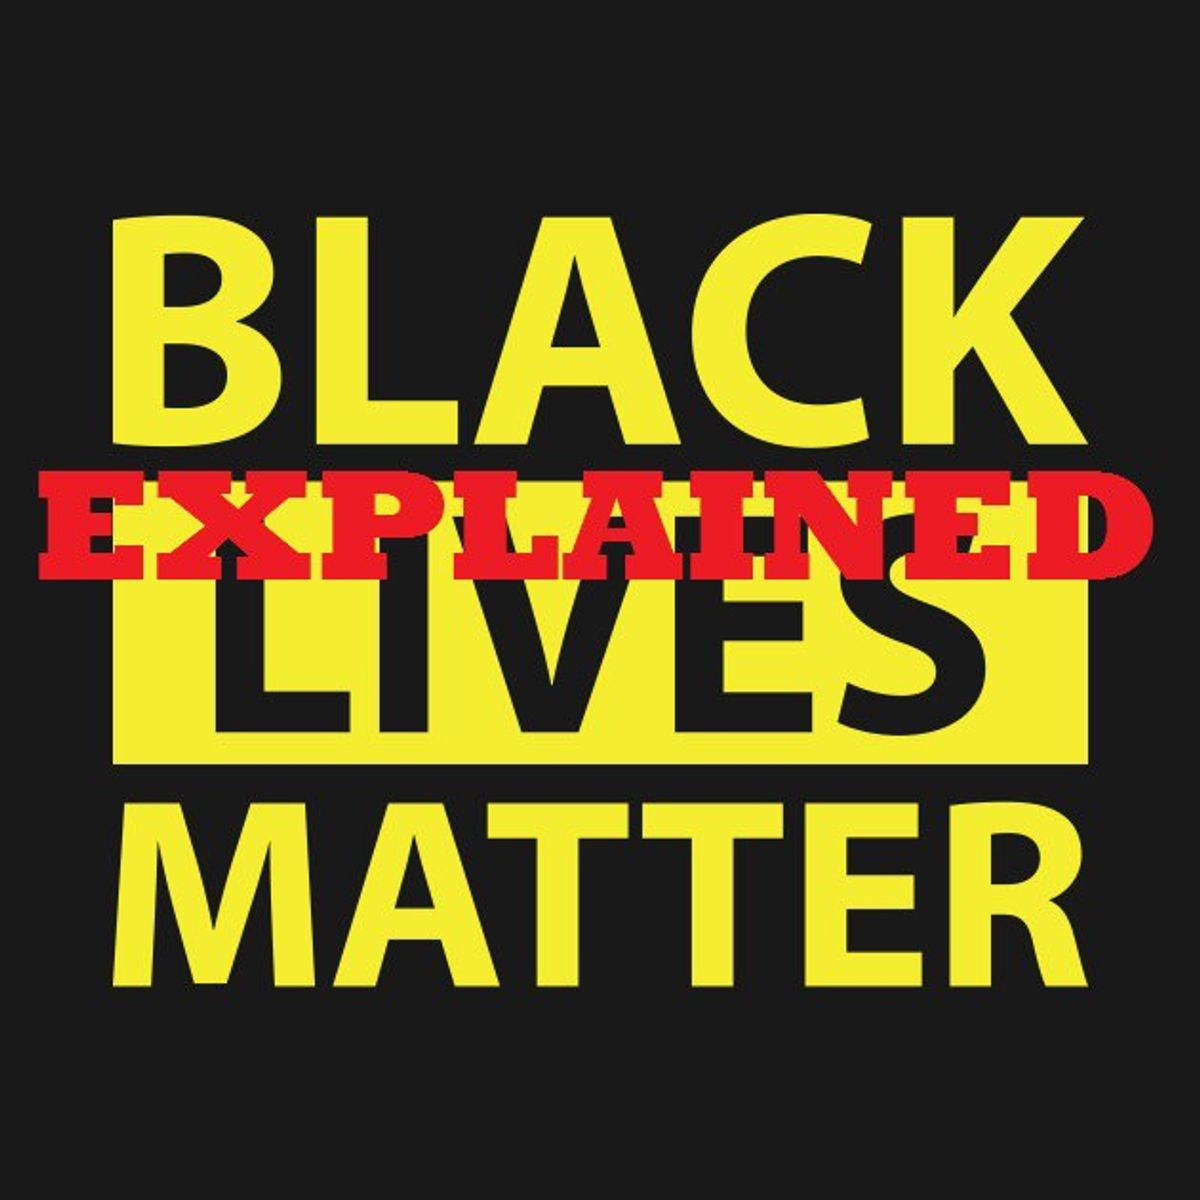 White Person Explains Why Black Lives Matter